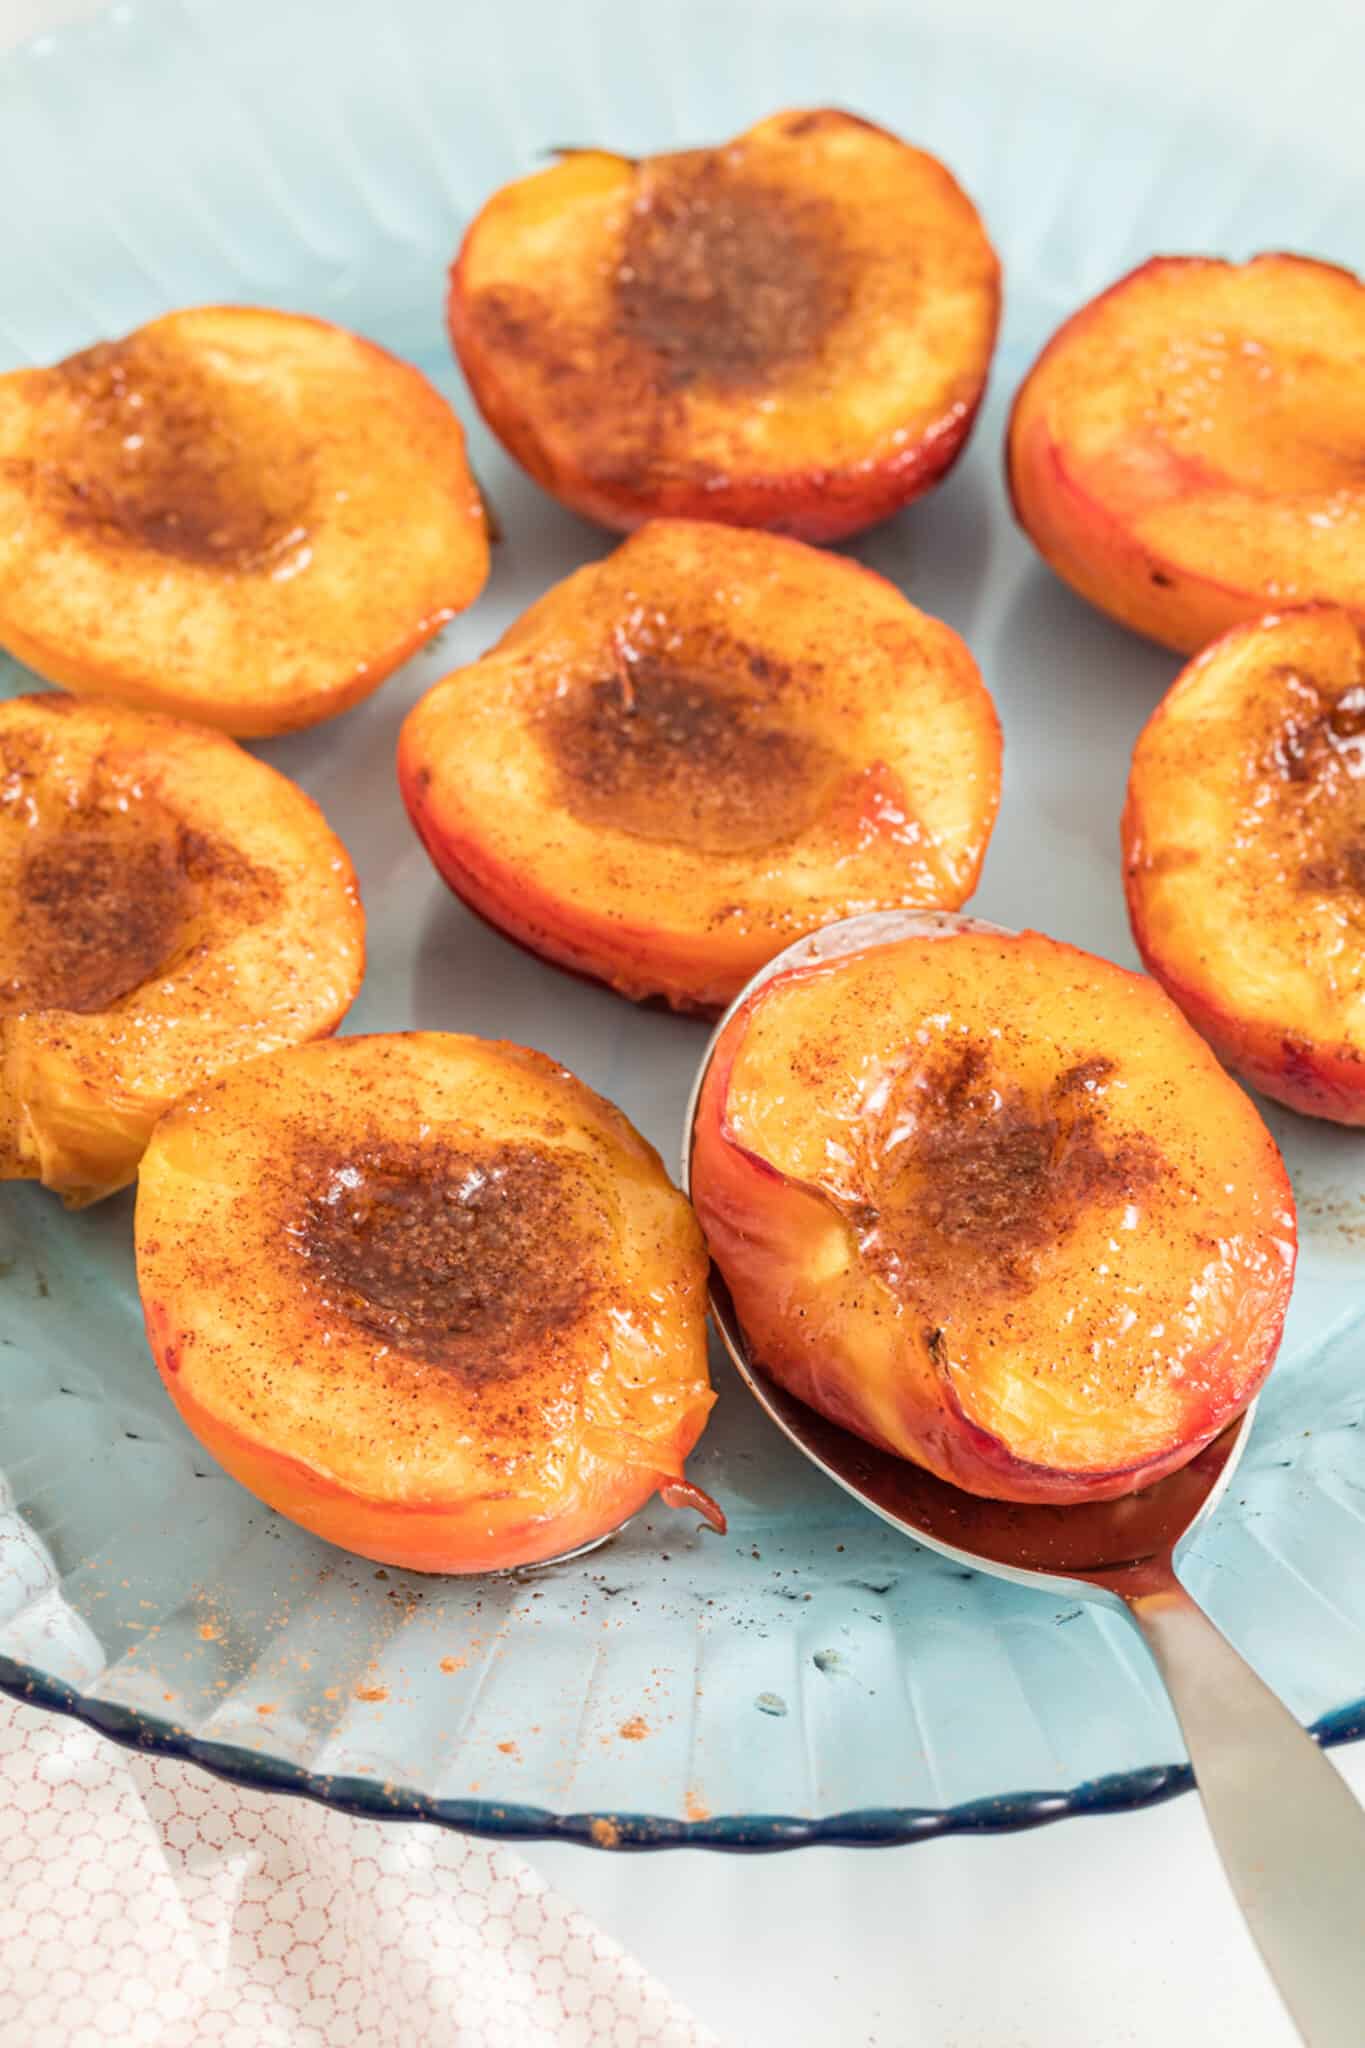 Caramelized air fryer peach halves on a serving platter.